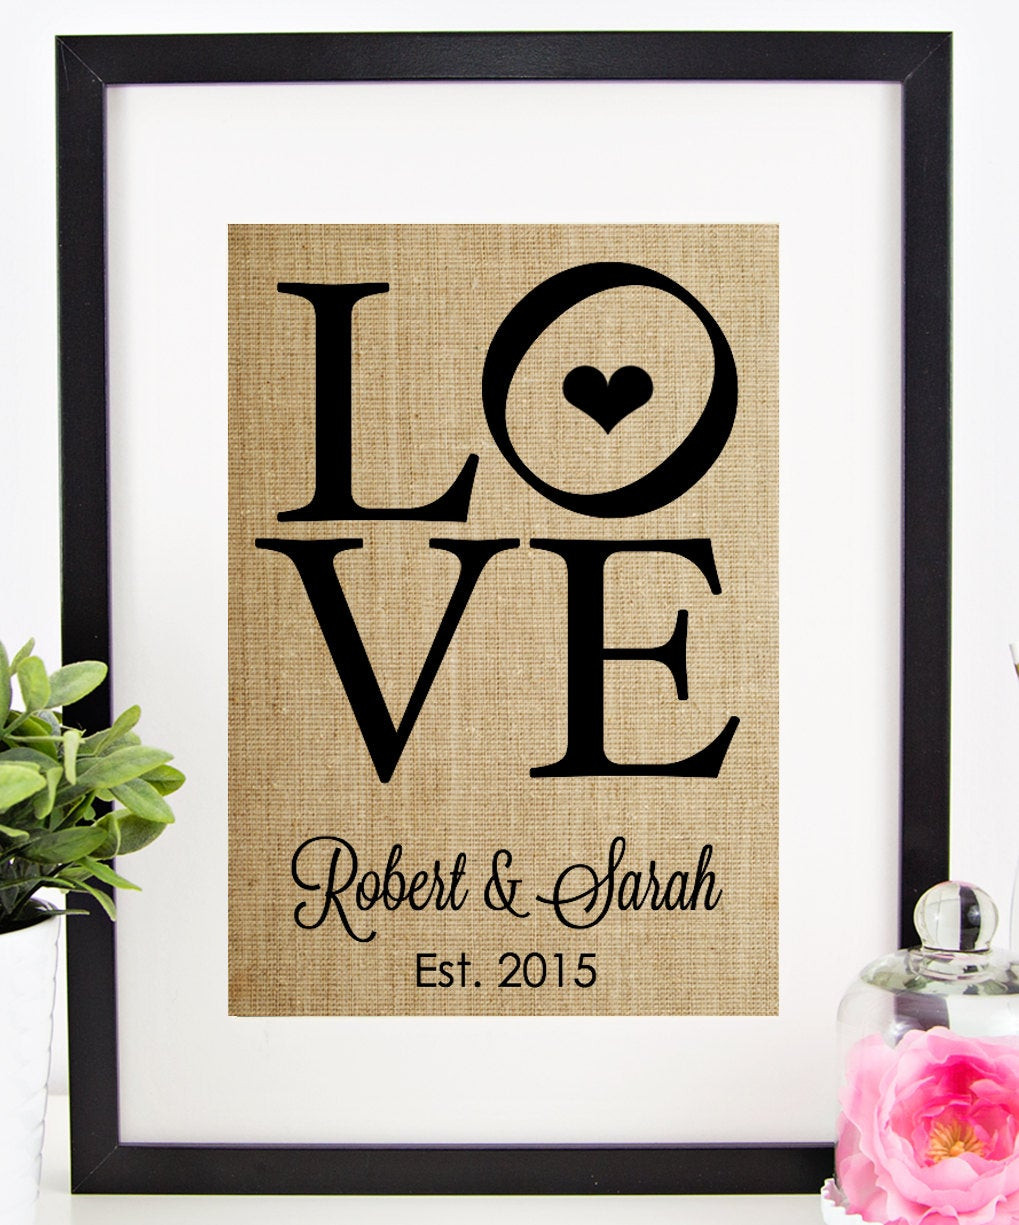 Unique Wedding Gift Ideas For Couple
 Personalized Wedding Gift for Couple Burlap Print LOVE Sign